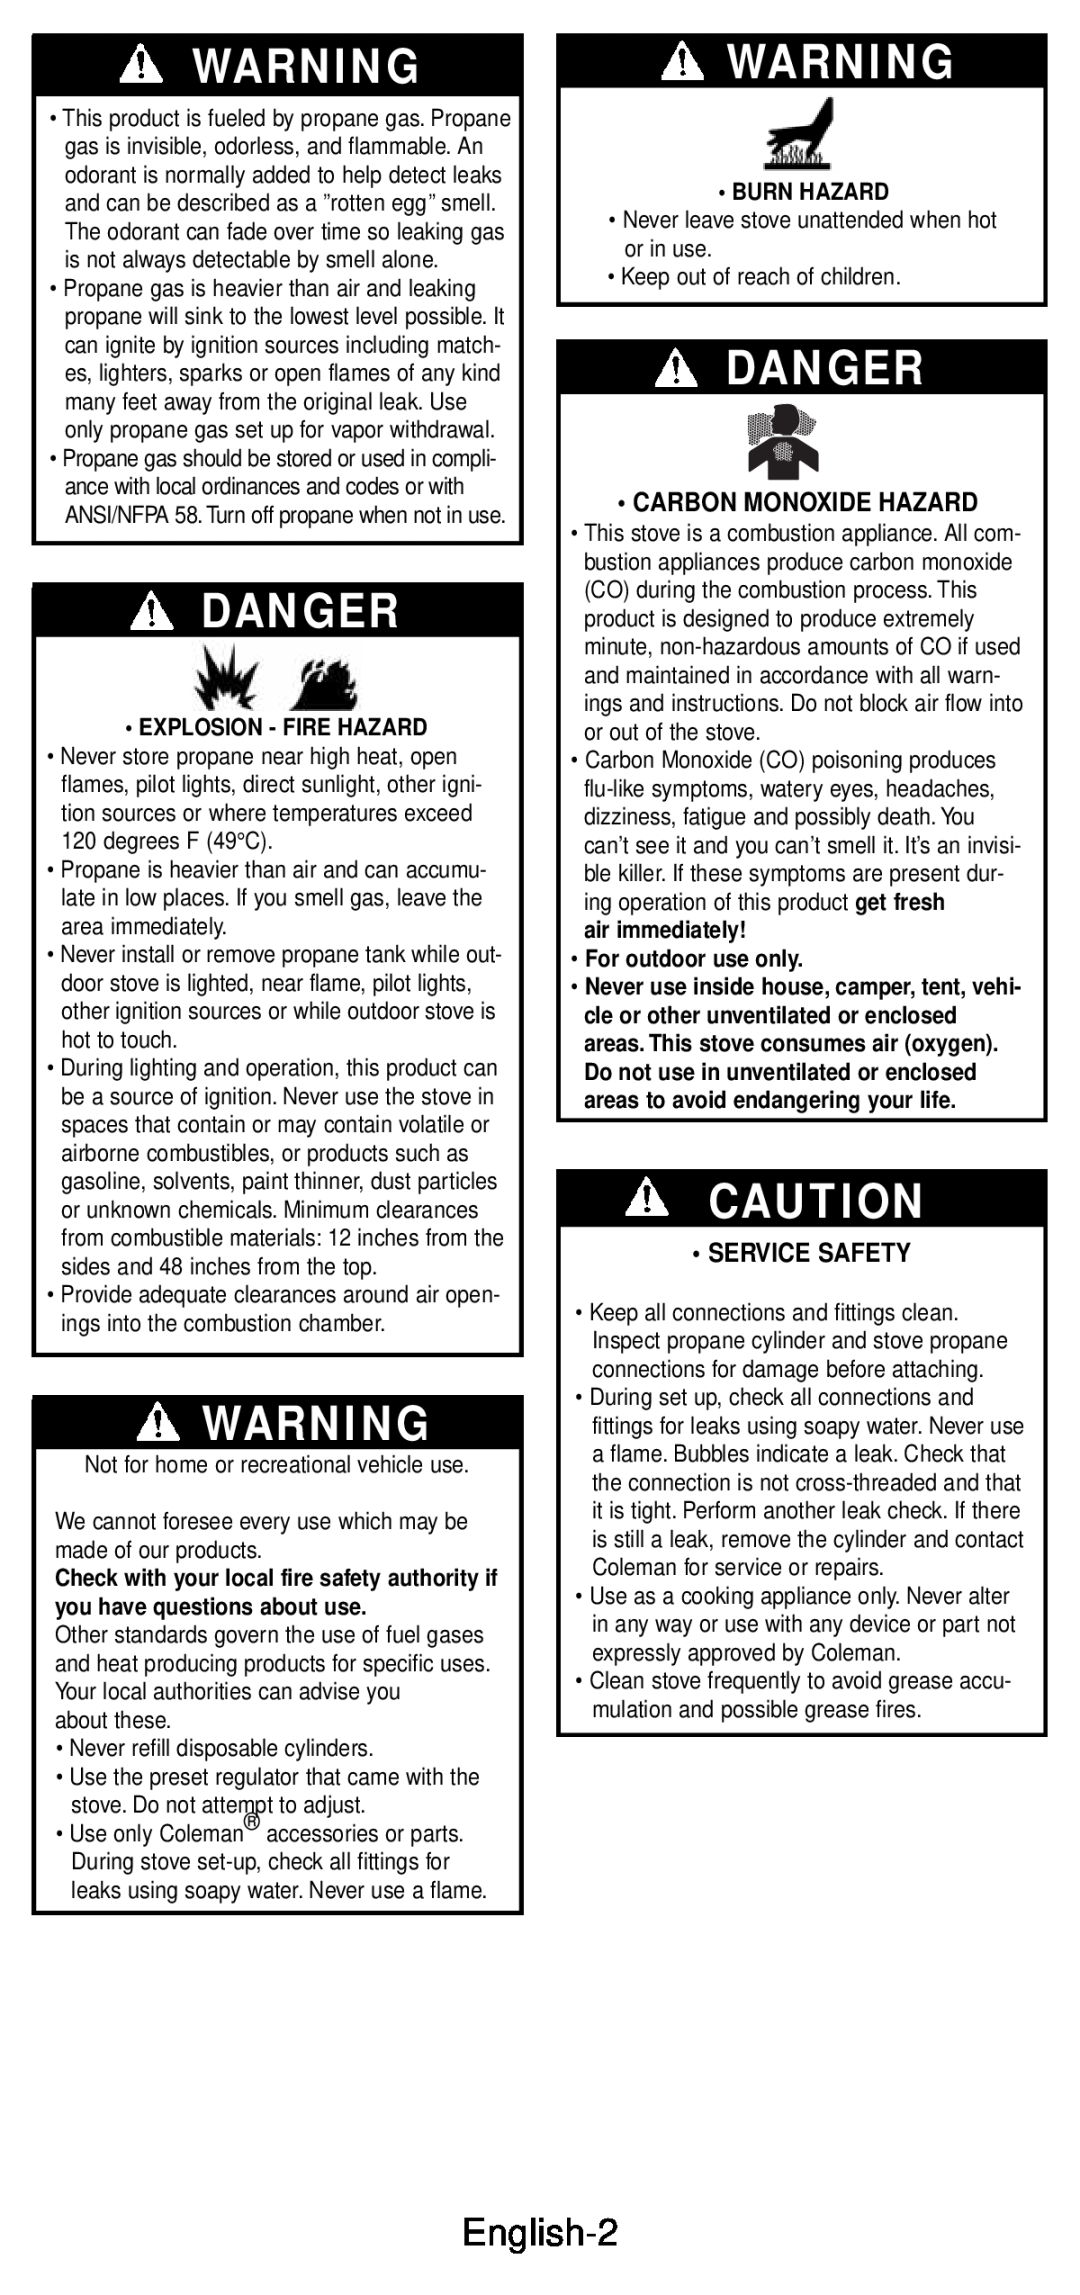 Coleman 5432A Series manual Danger, English-2, Carbon Monoxide Hazard, Service Safety, Explosion - Fire Hazard, Burn Hazard 